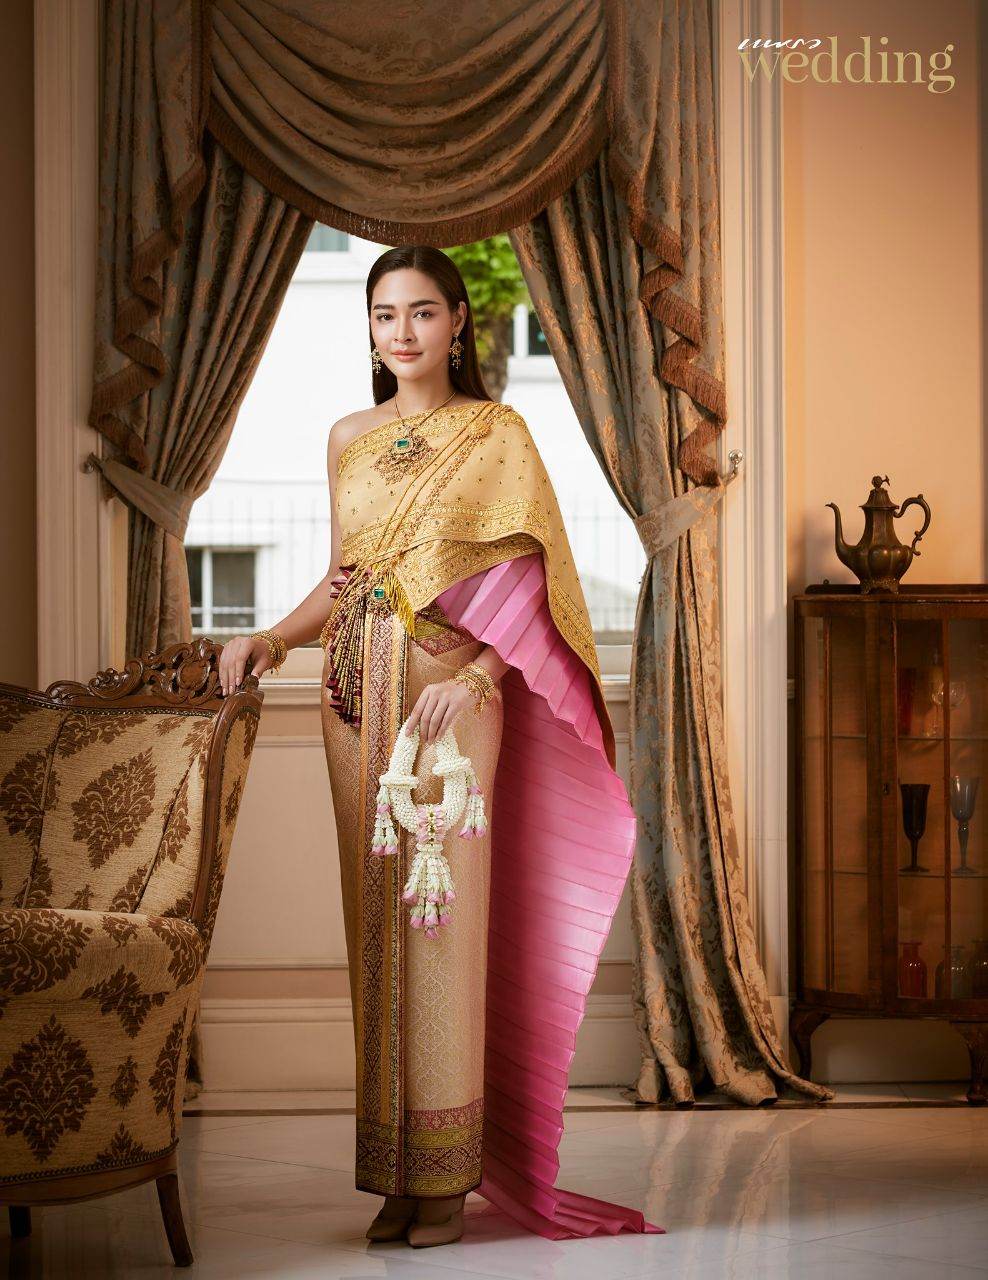 Thai Wedding Dress: Thai National Costume | THAILAND 🇹🇭